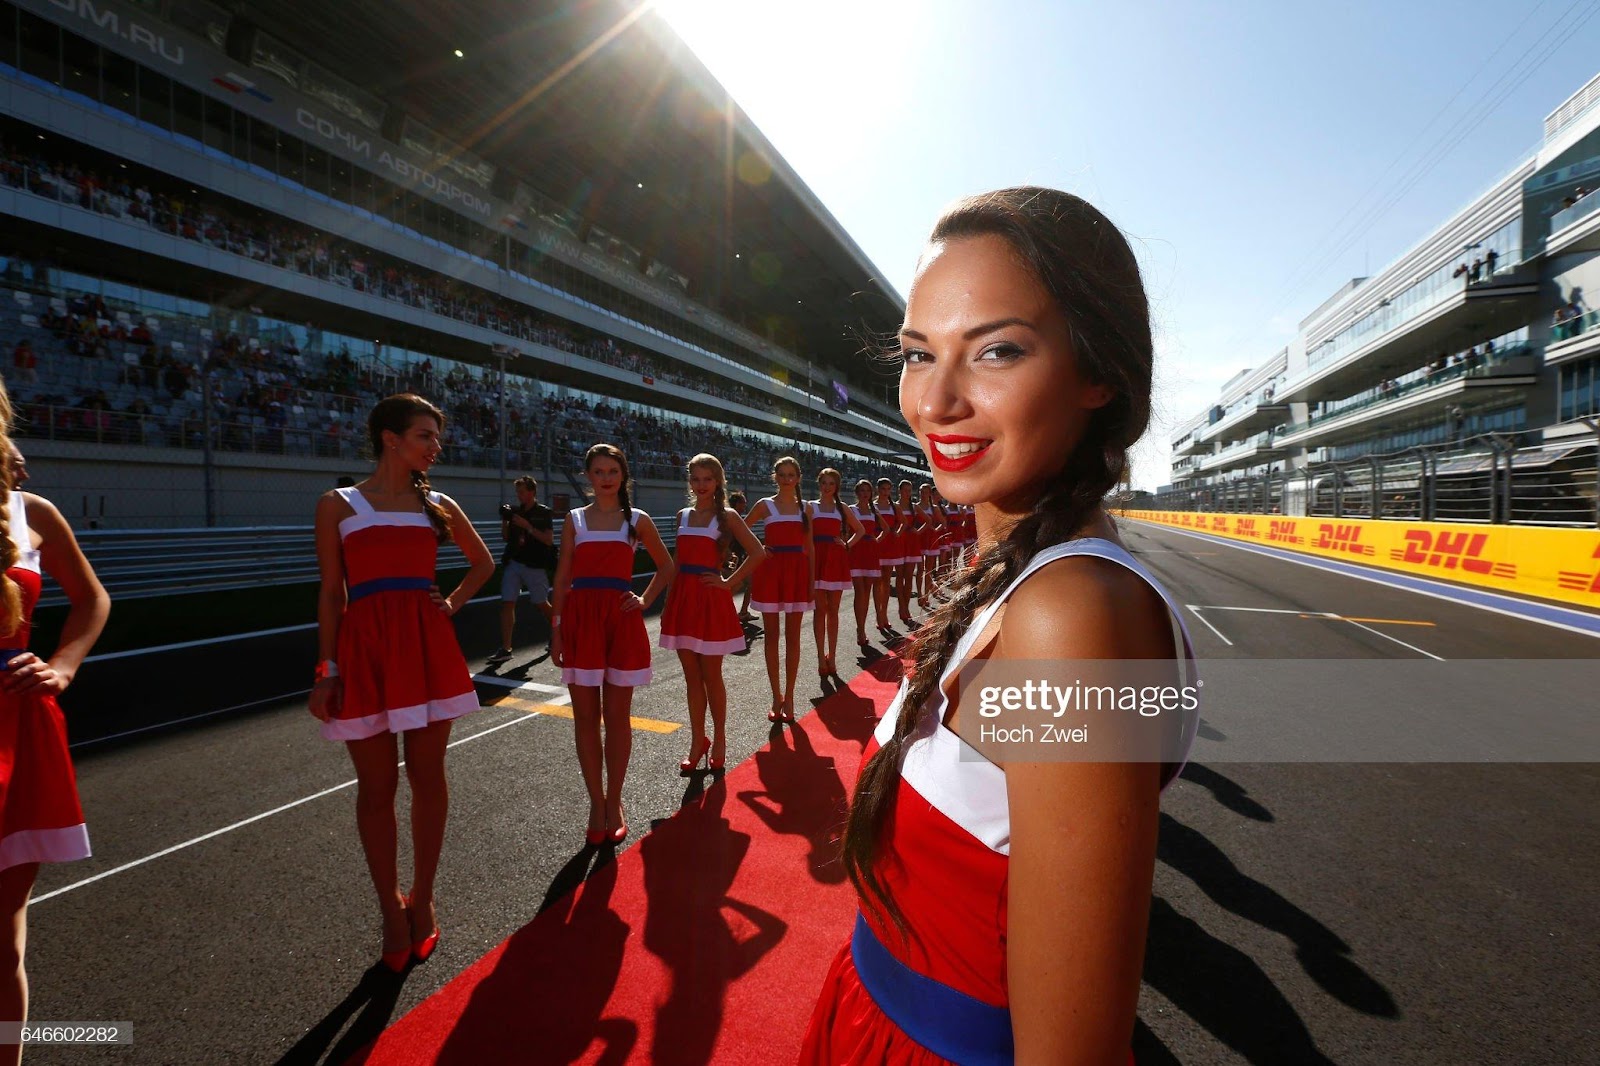 F1 World Championship 2014, Grand Prix of Russia, grid girls.